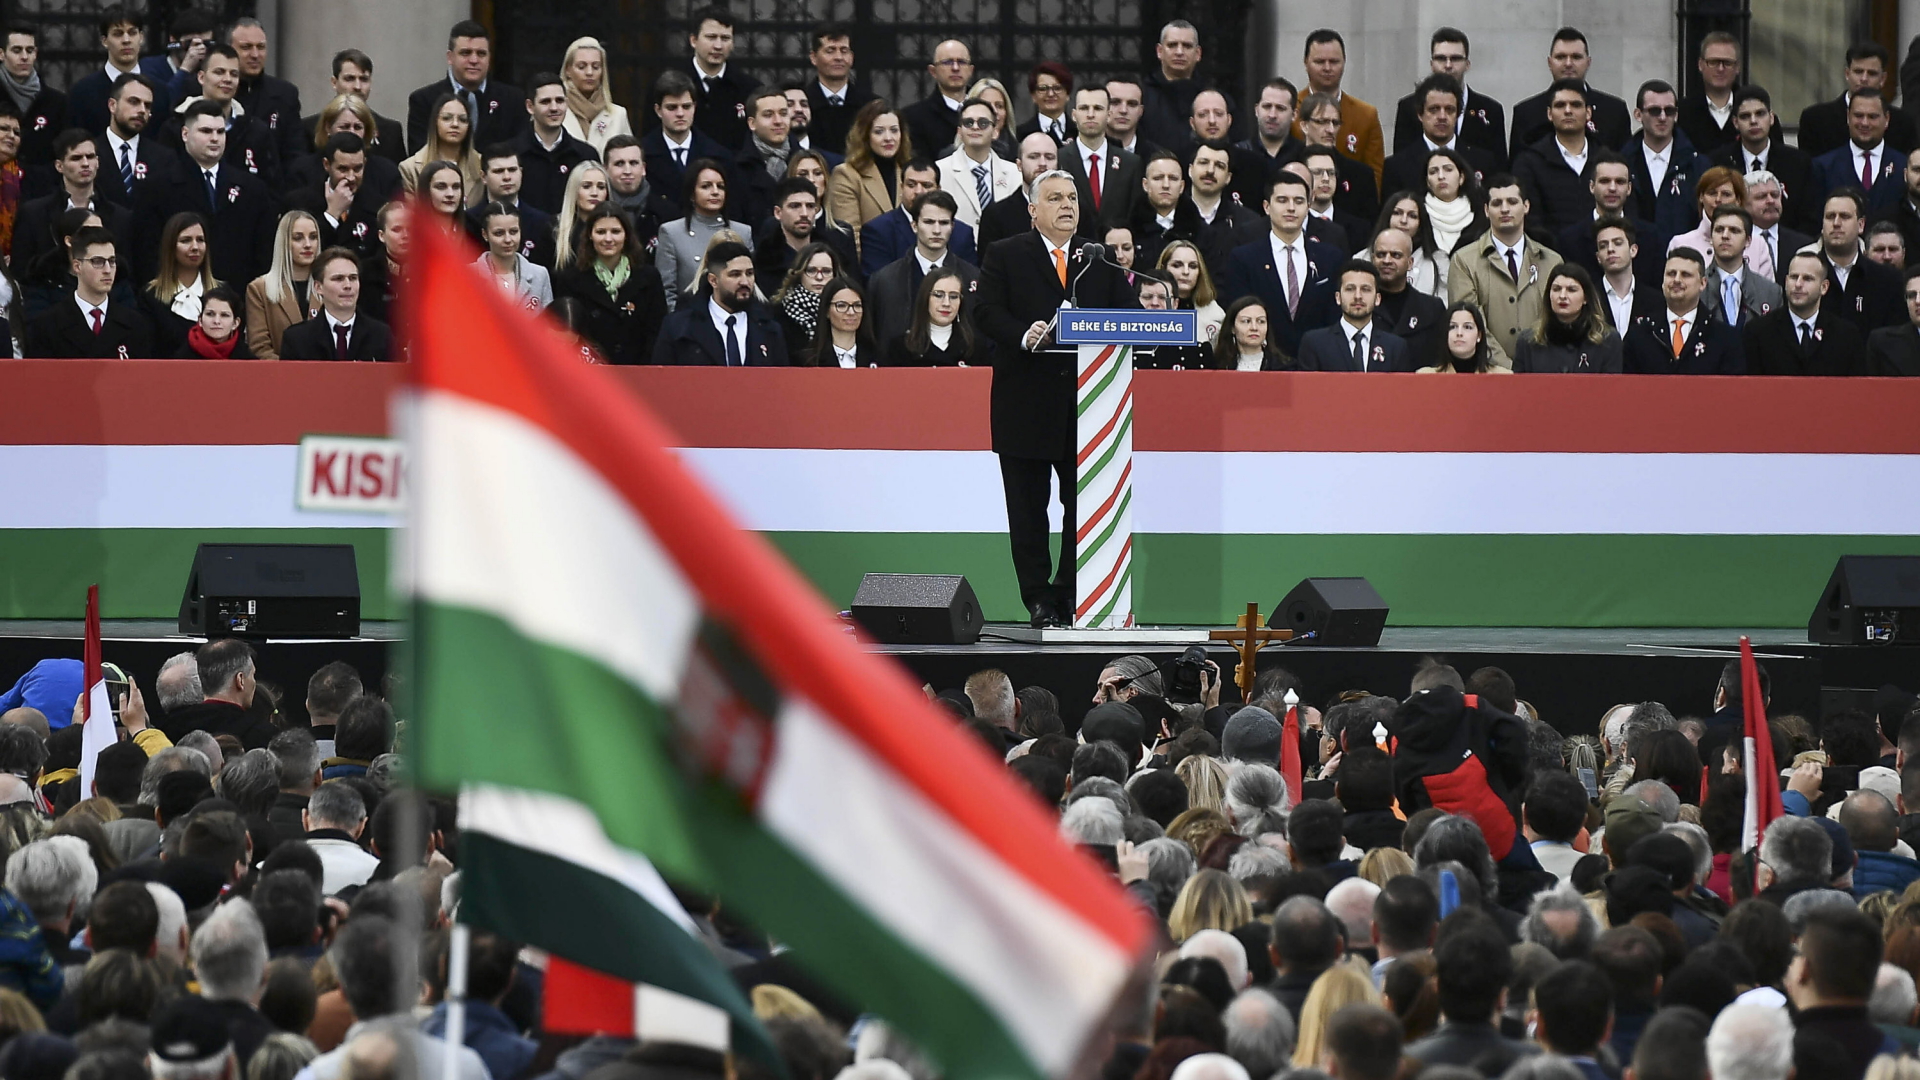 Wehende Staatsflaggen, große Bühne: So inszeniert sich Orban.